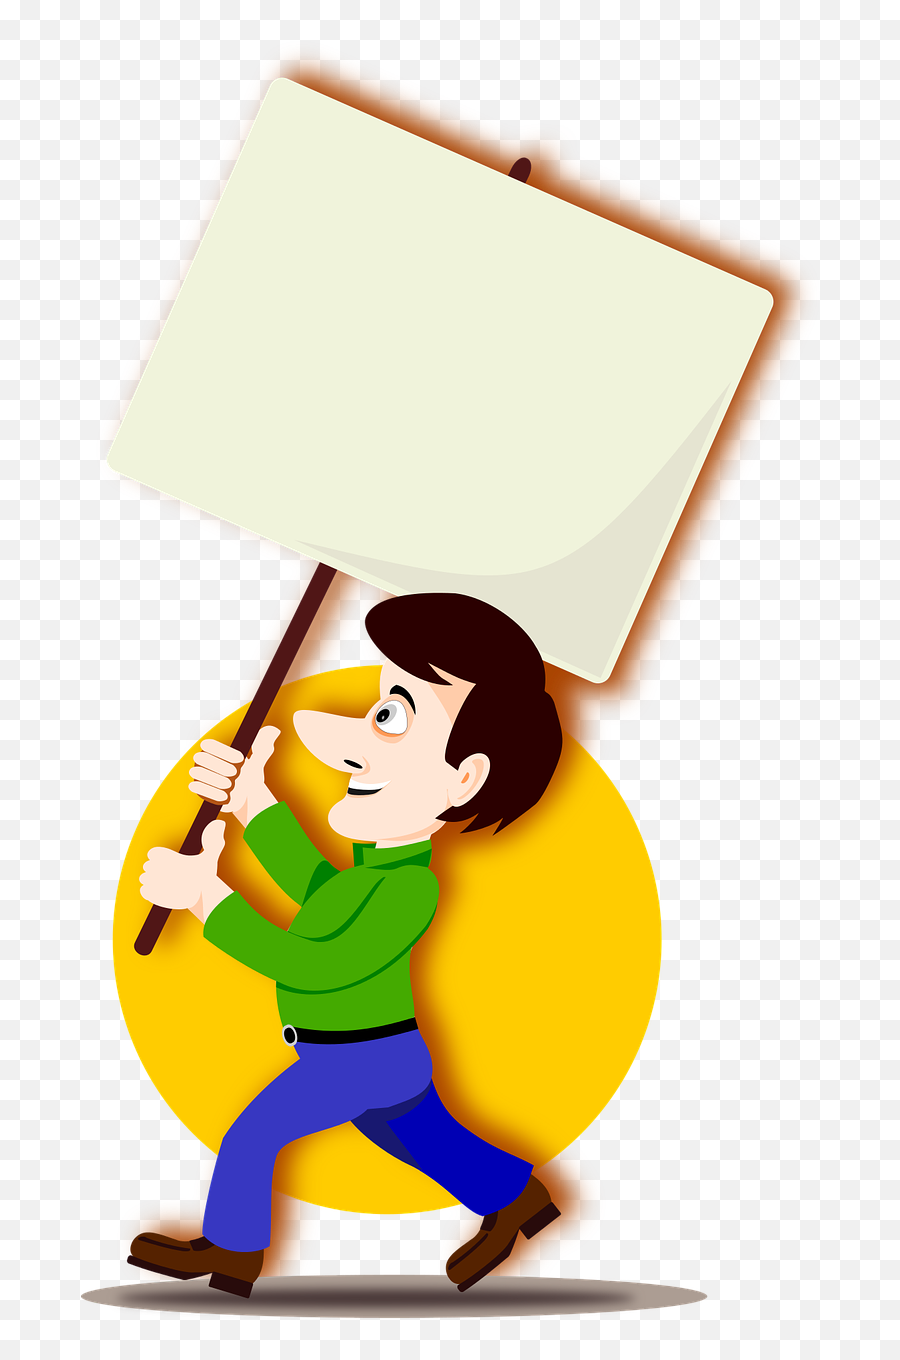 Free Photos Search Download Needpix Com - Happy Emoji,Protest Clipart